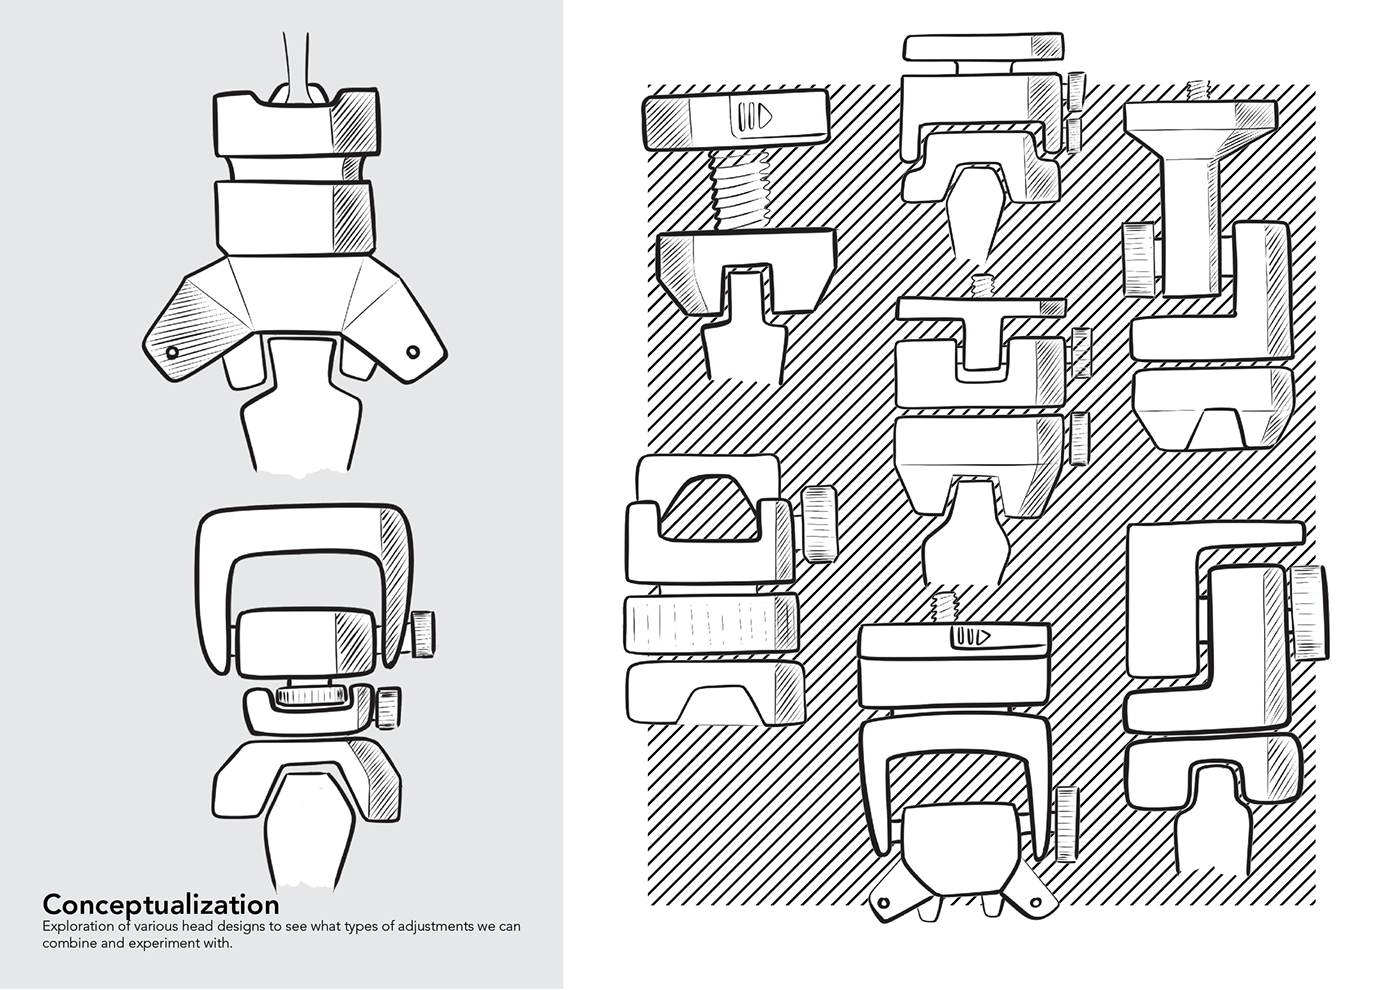 InDesign productdesign industrialdesign tripod cameraaccessories